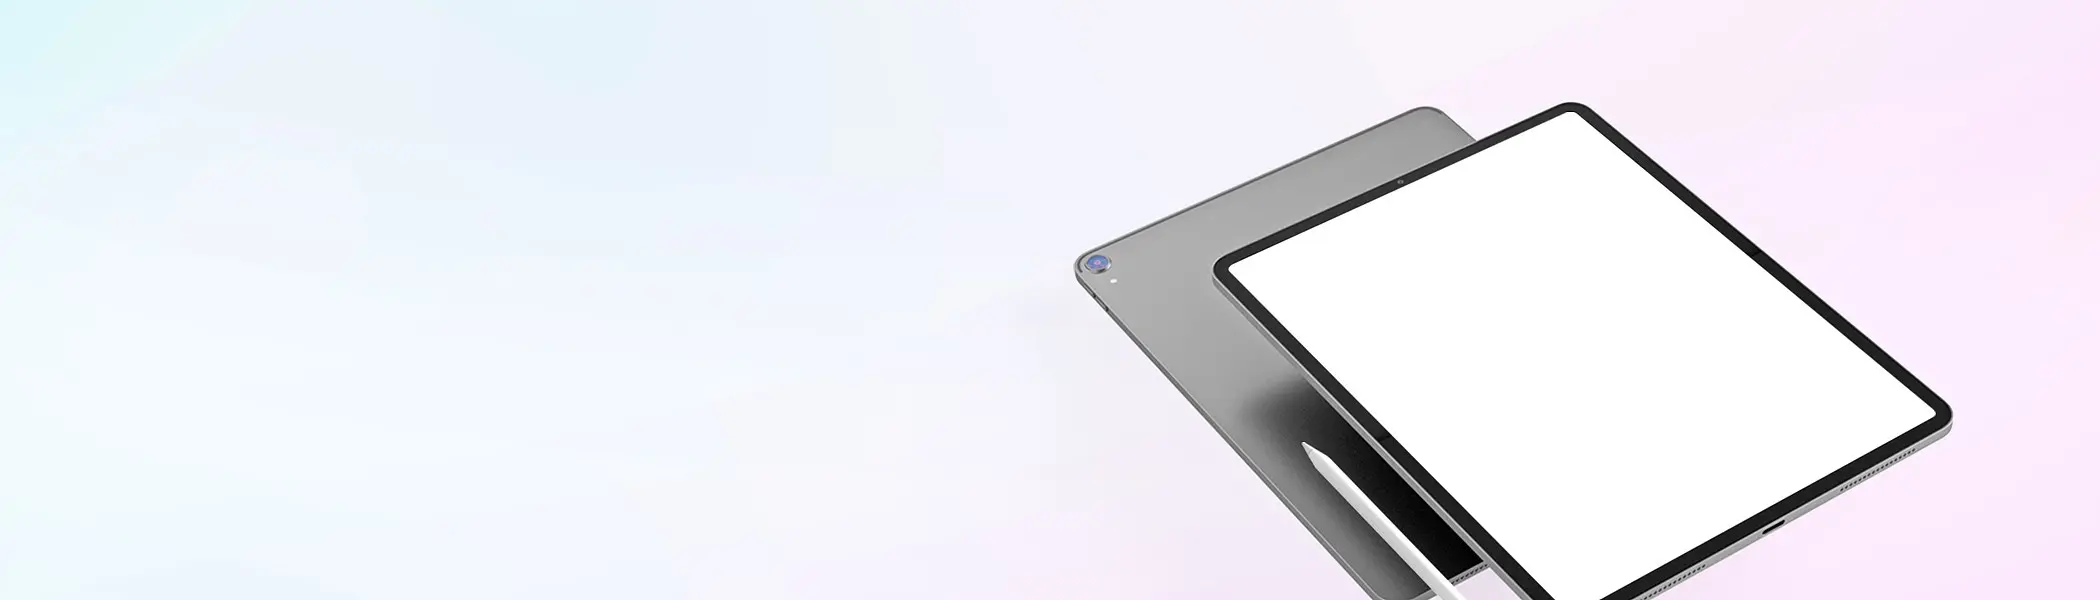 Download iPad Mockup Generator | Mediamodifier Mockups